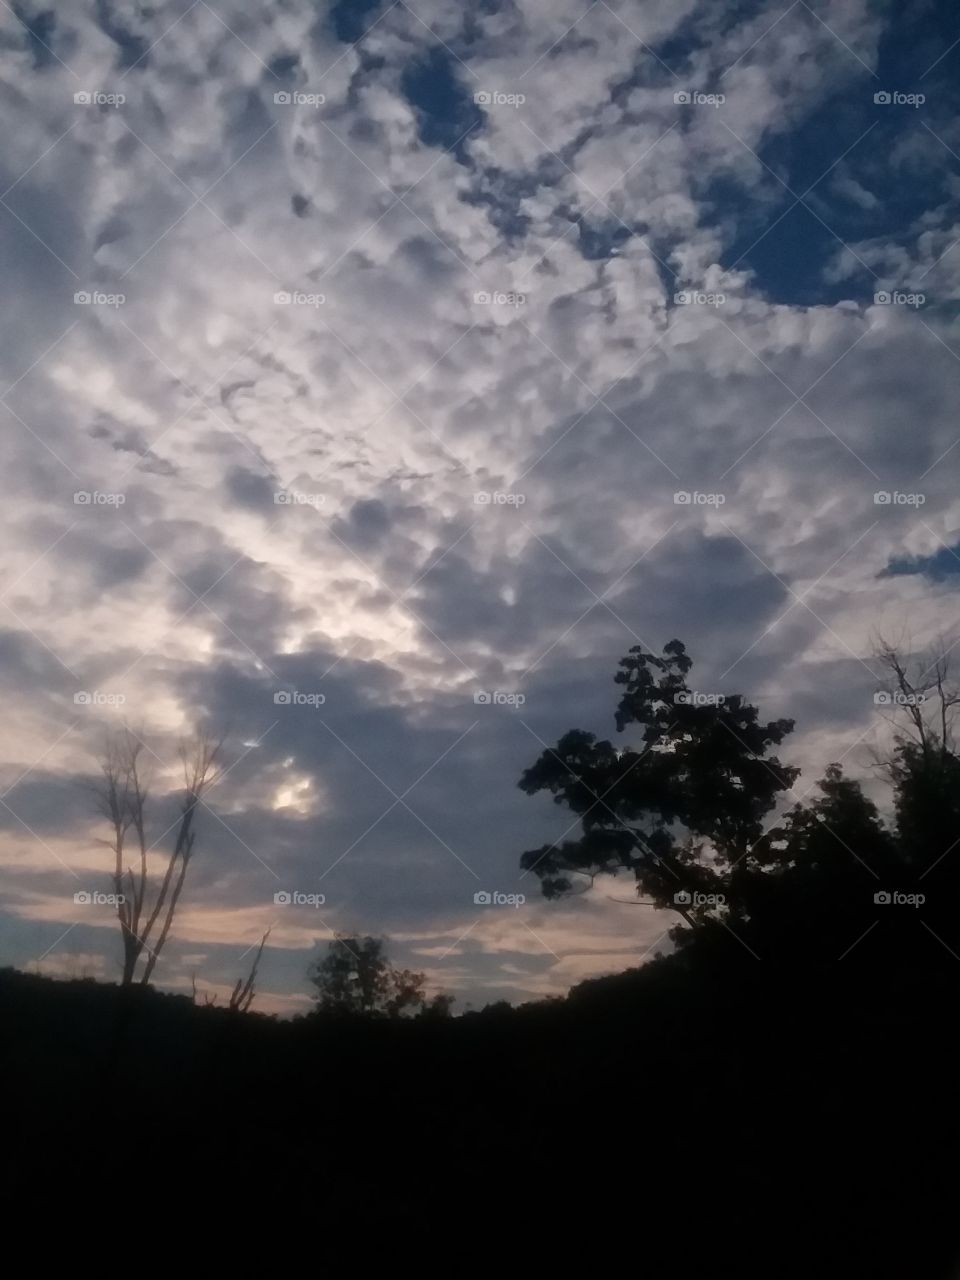 my sky